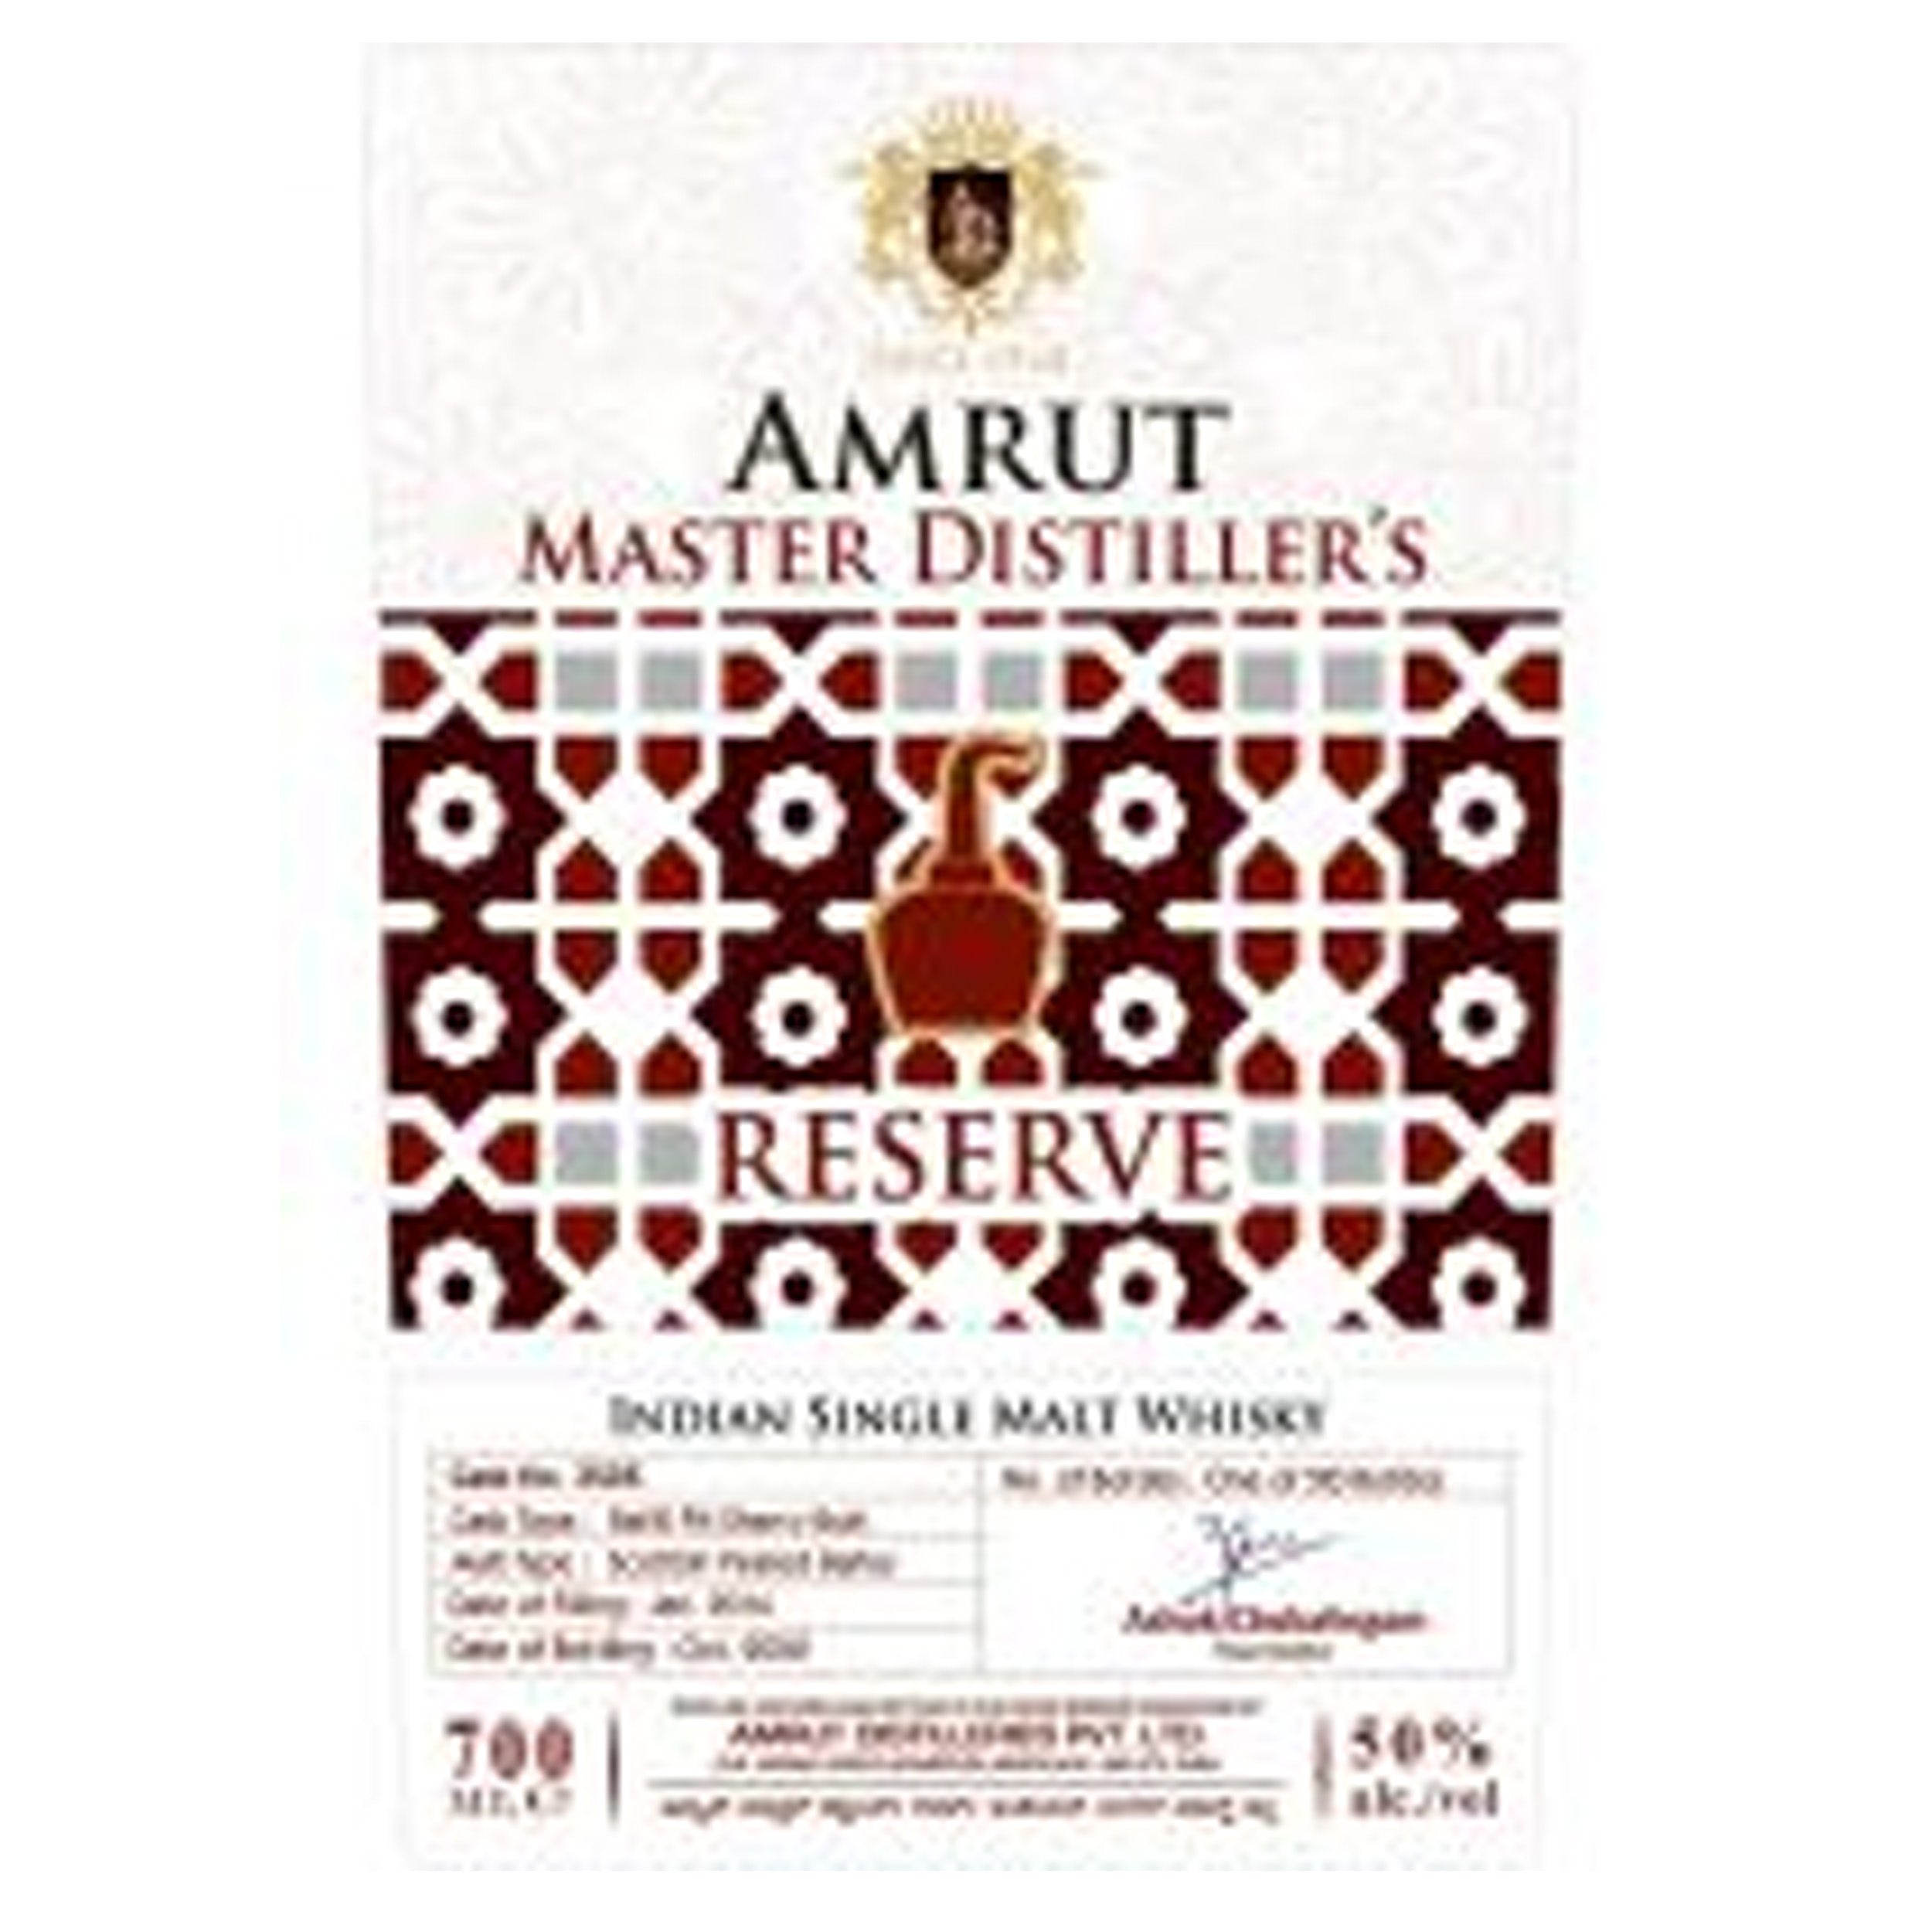 Amrut Master Distiller's Reserve Indian Single Malt Whisky